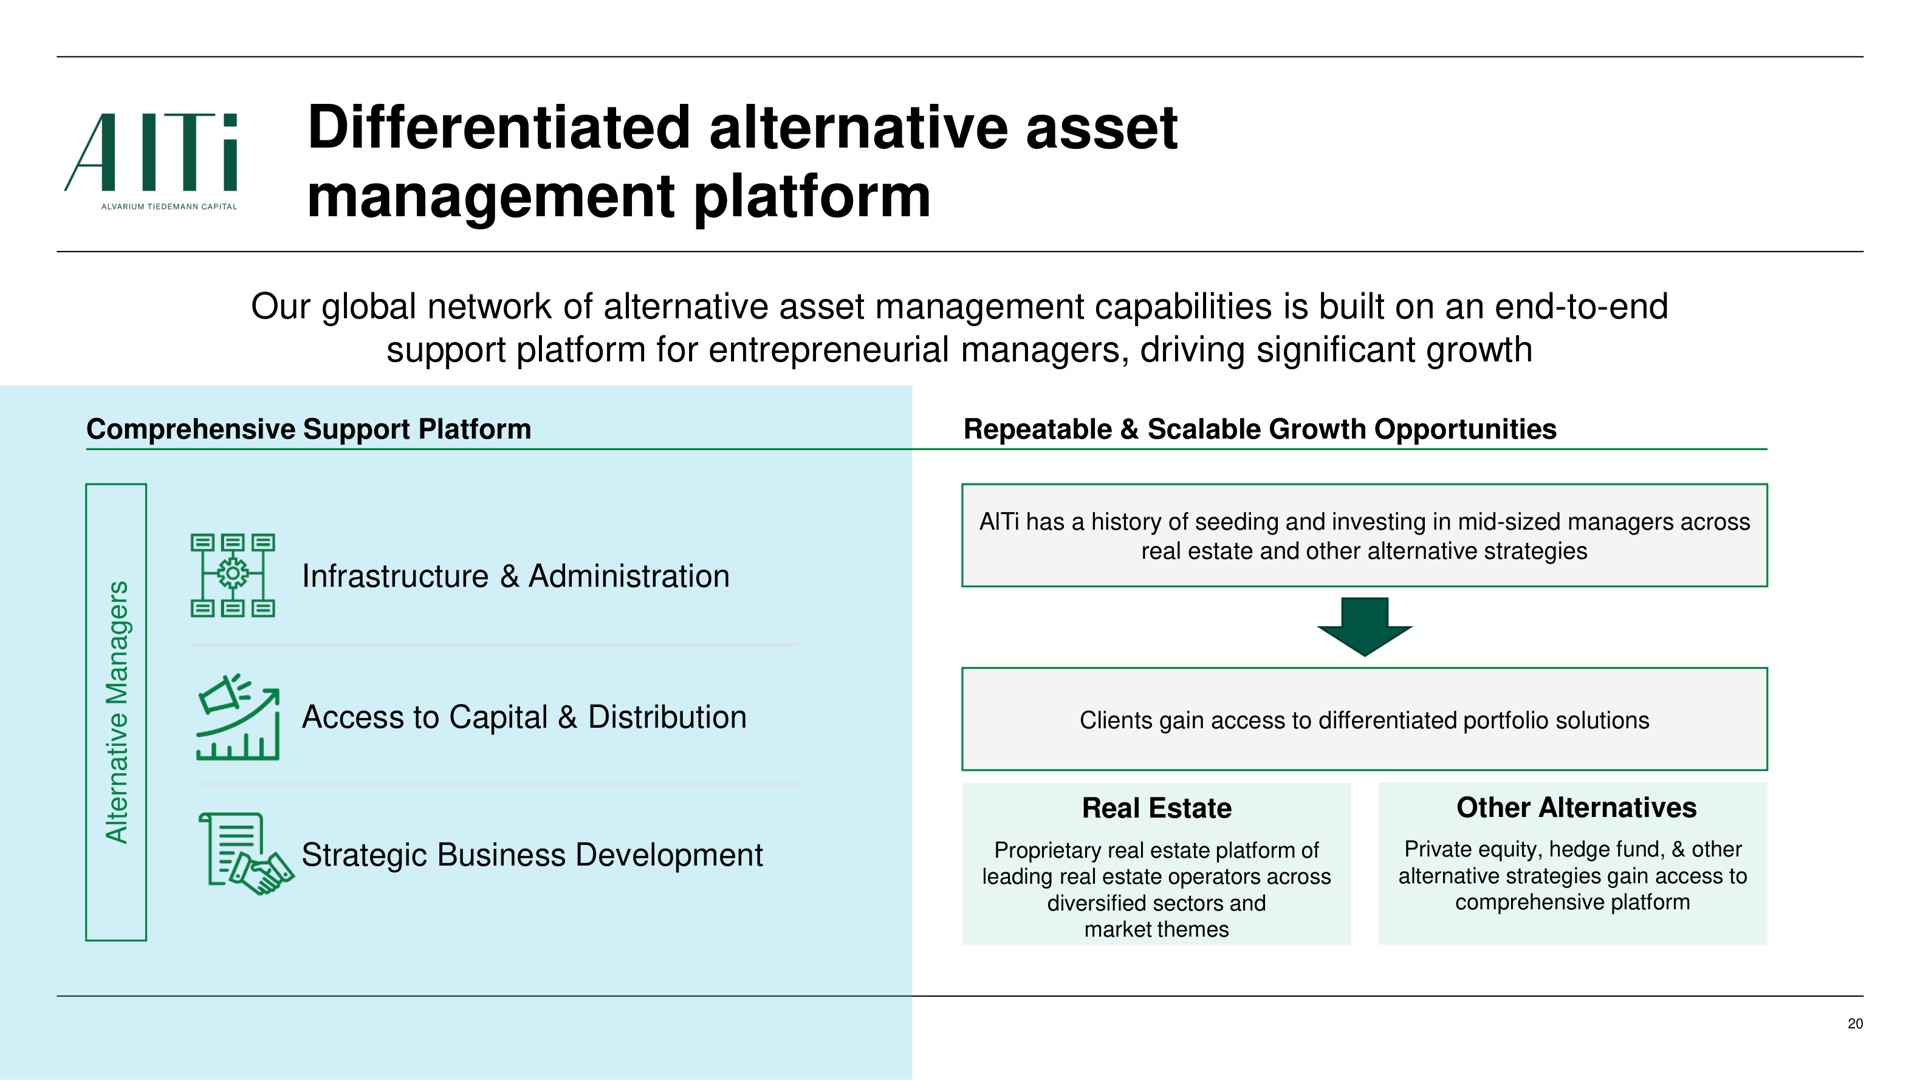 differentiated alternative asset management platform a strategic business development | AlTi